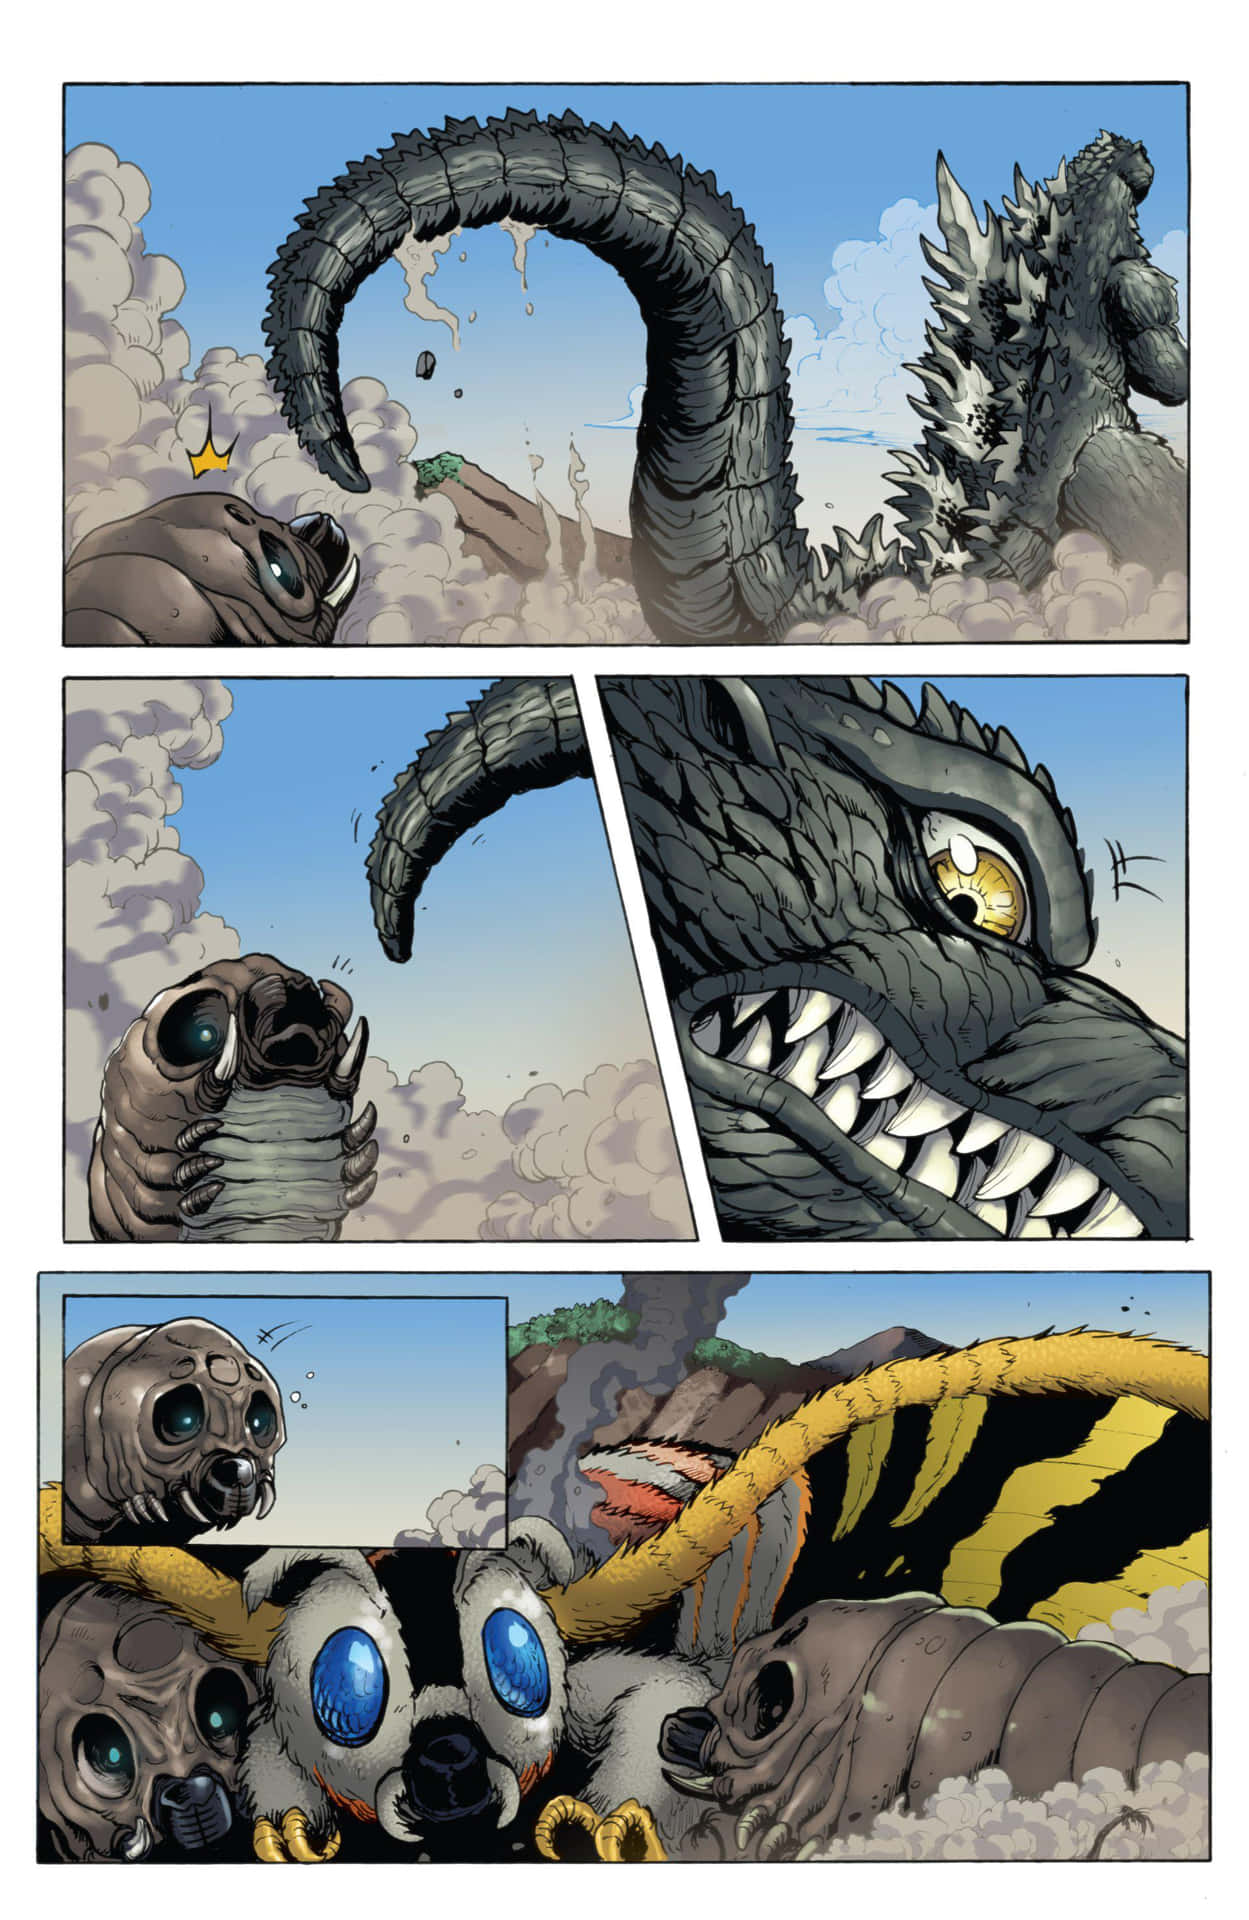 Caption: Epic Battle: Godzilla Vs Mothra in Full Glory Wallpaper